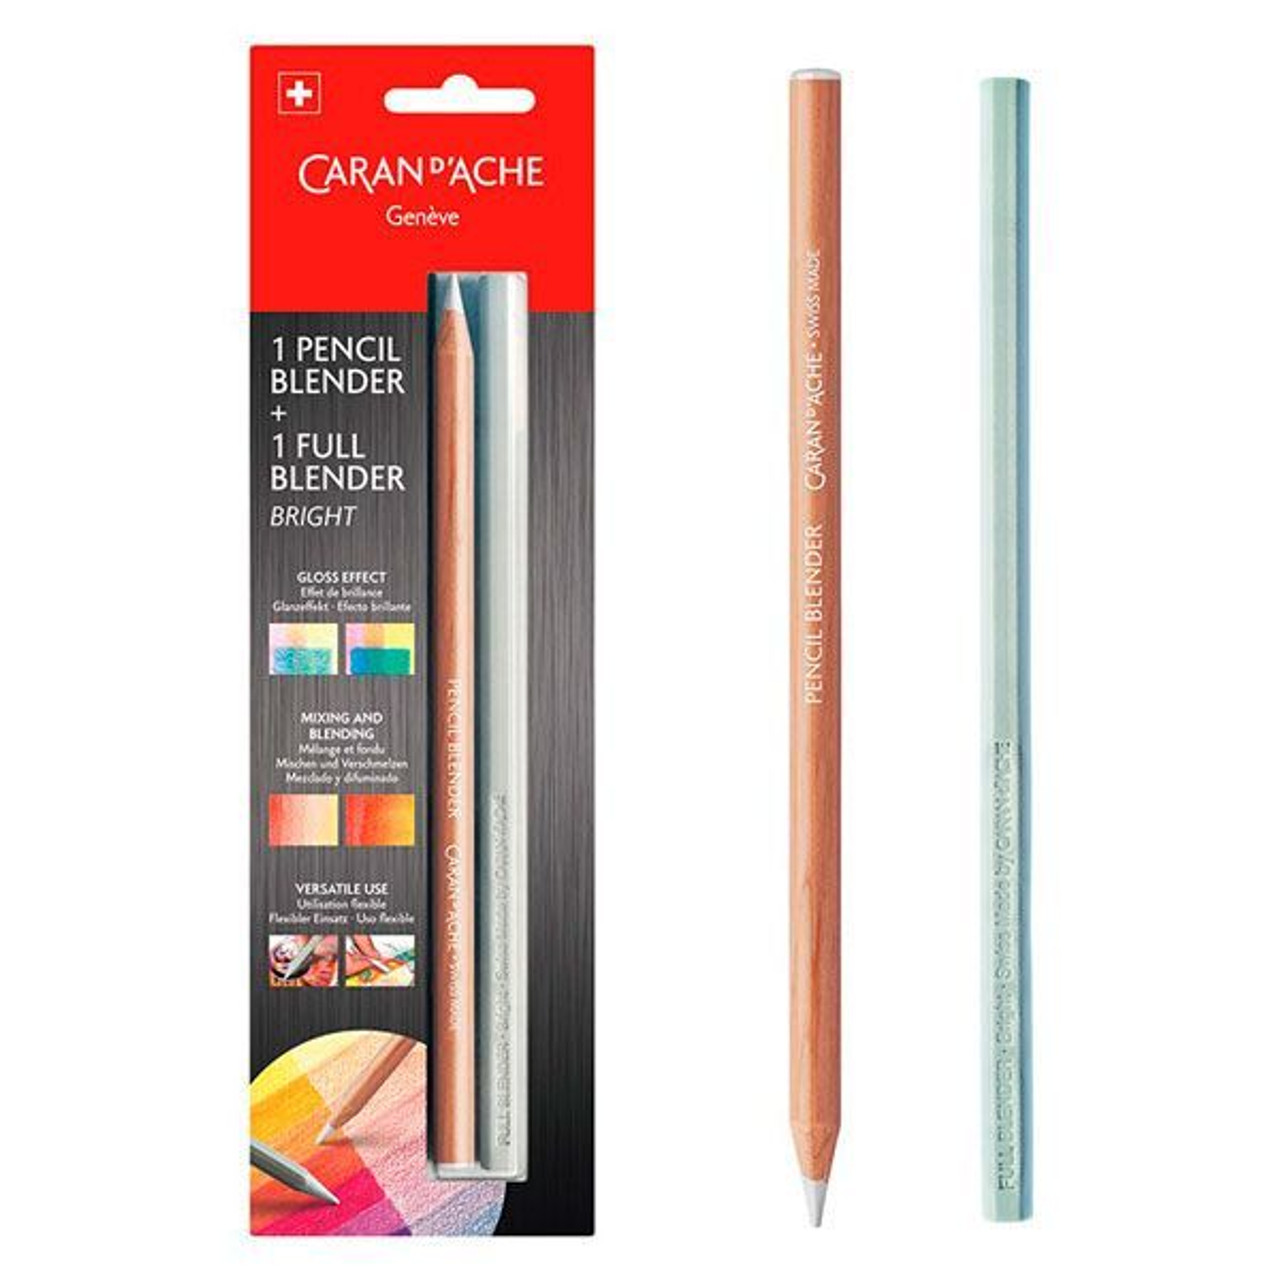 Charcoal Pencils Blender, Pencil Blender Drawing